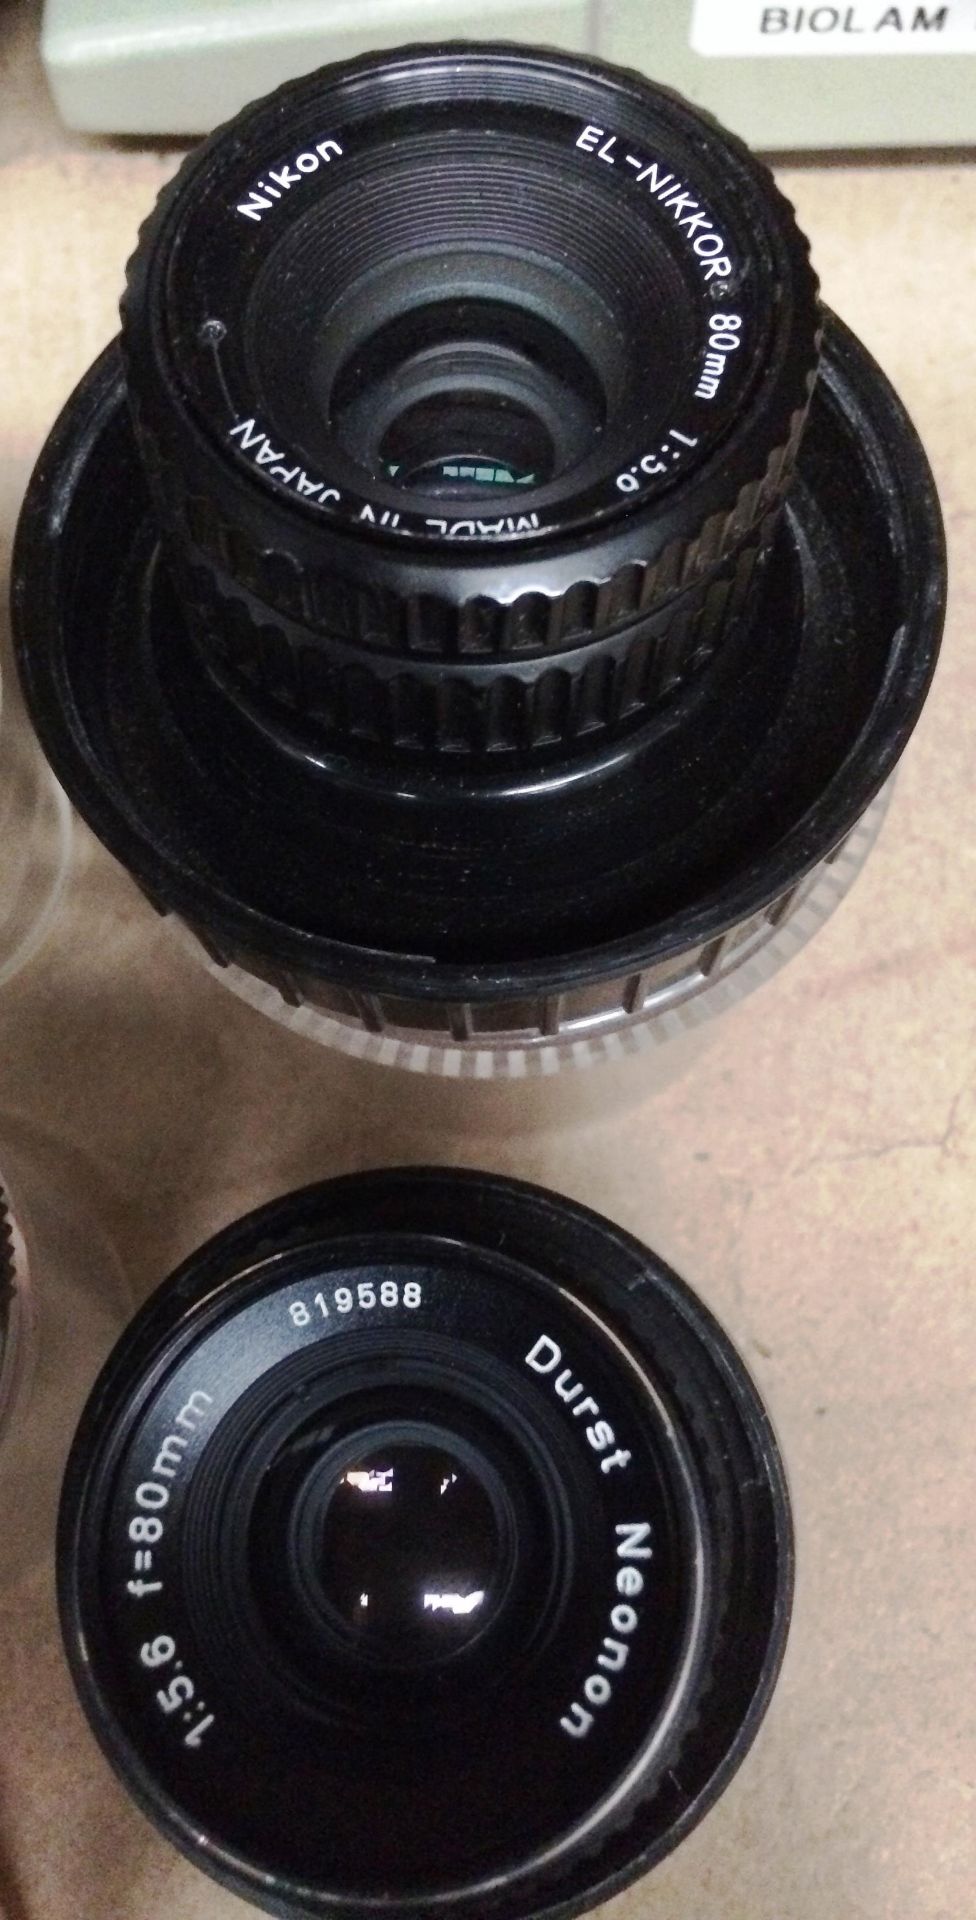 8 x assorted lenses - Durst Neonon 1:5.6 F-80mm, Nikon EL-Nikkor 80mm 1:56. - Image 4 of 4